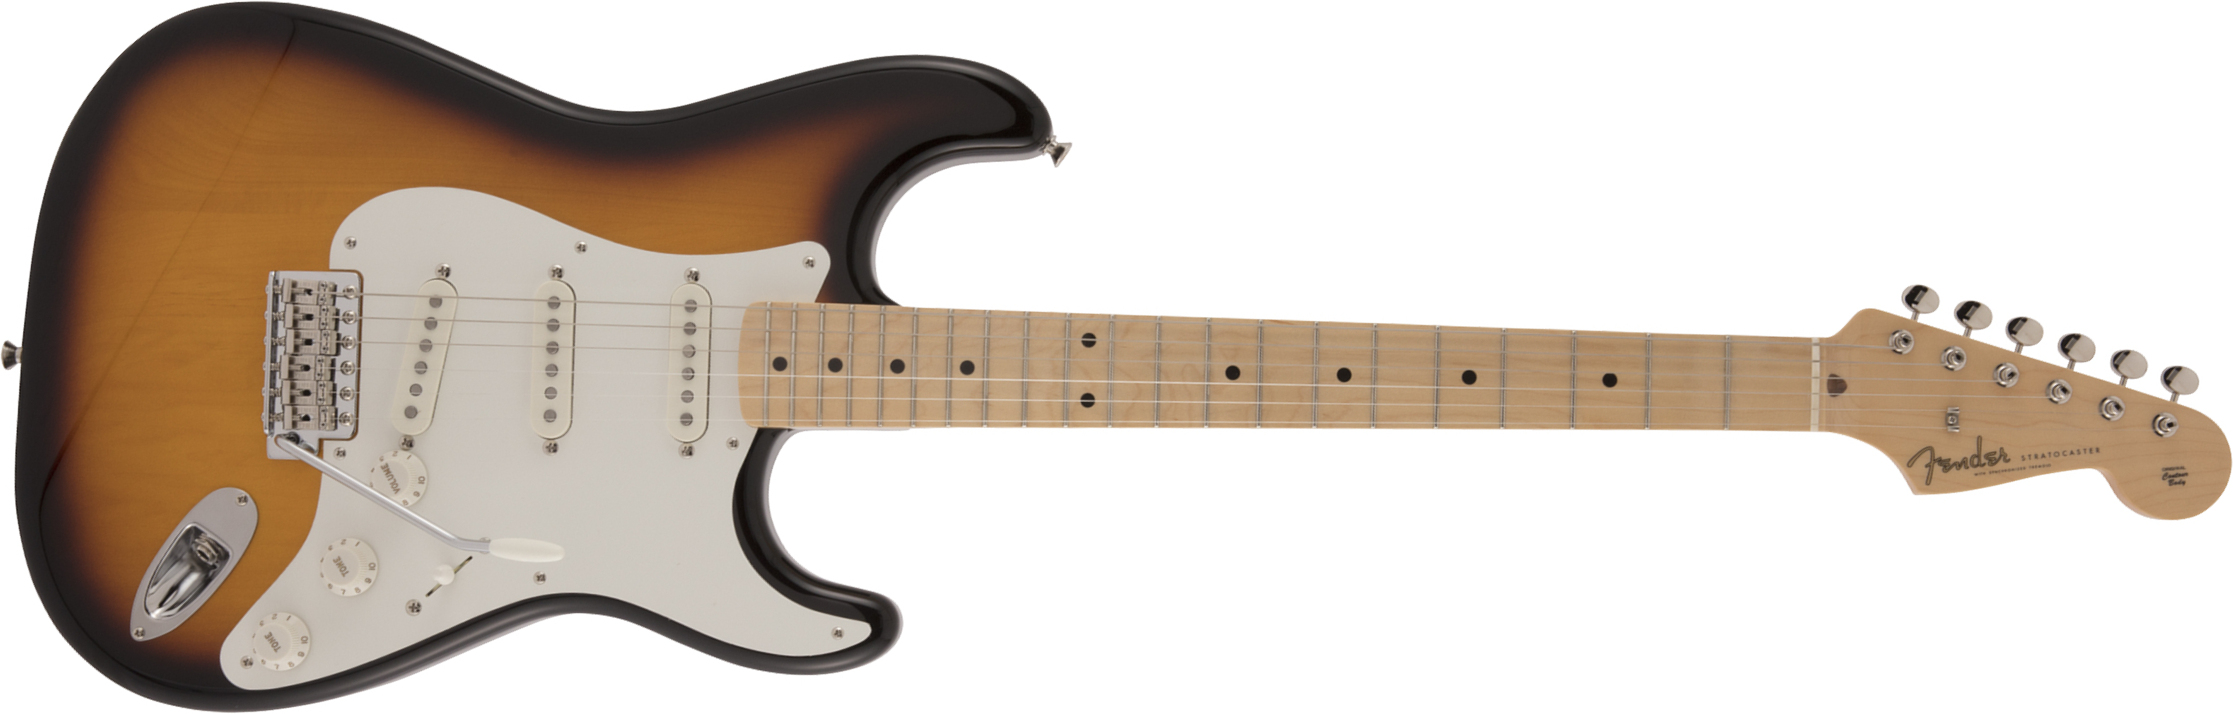 Fender Strat Traditional 50s Jap Mn - 2-color Sunburst - Str shape electric guitar - Main picture